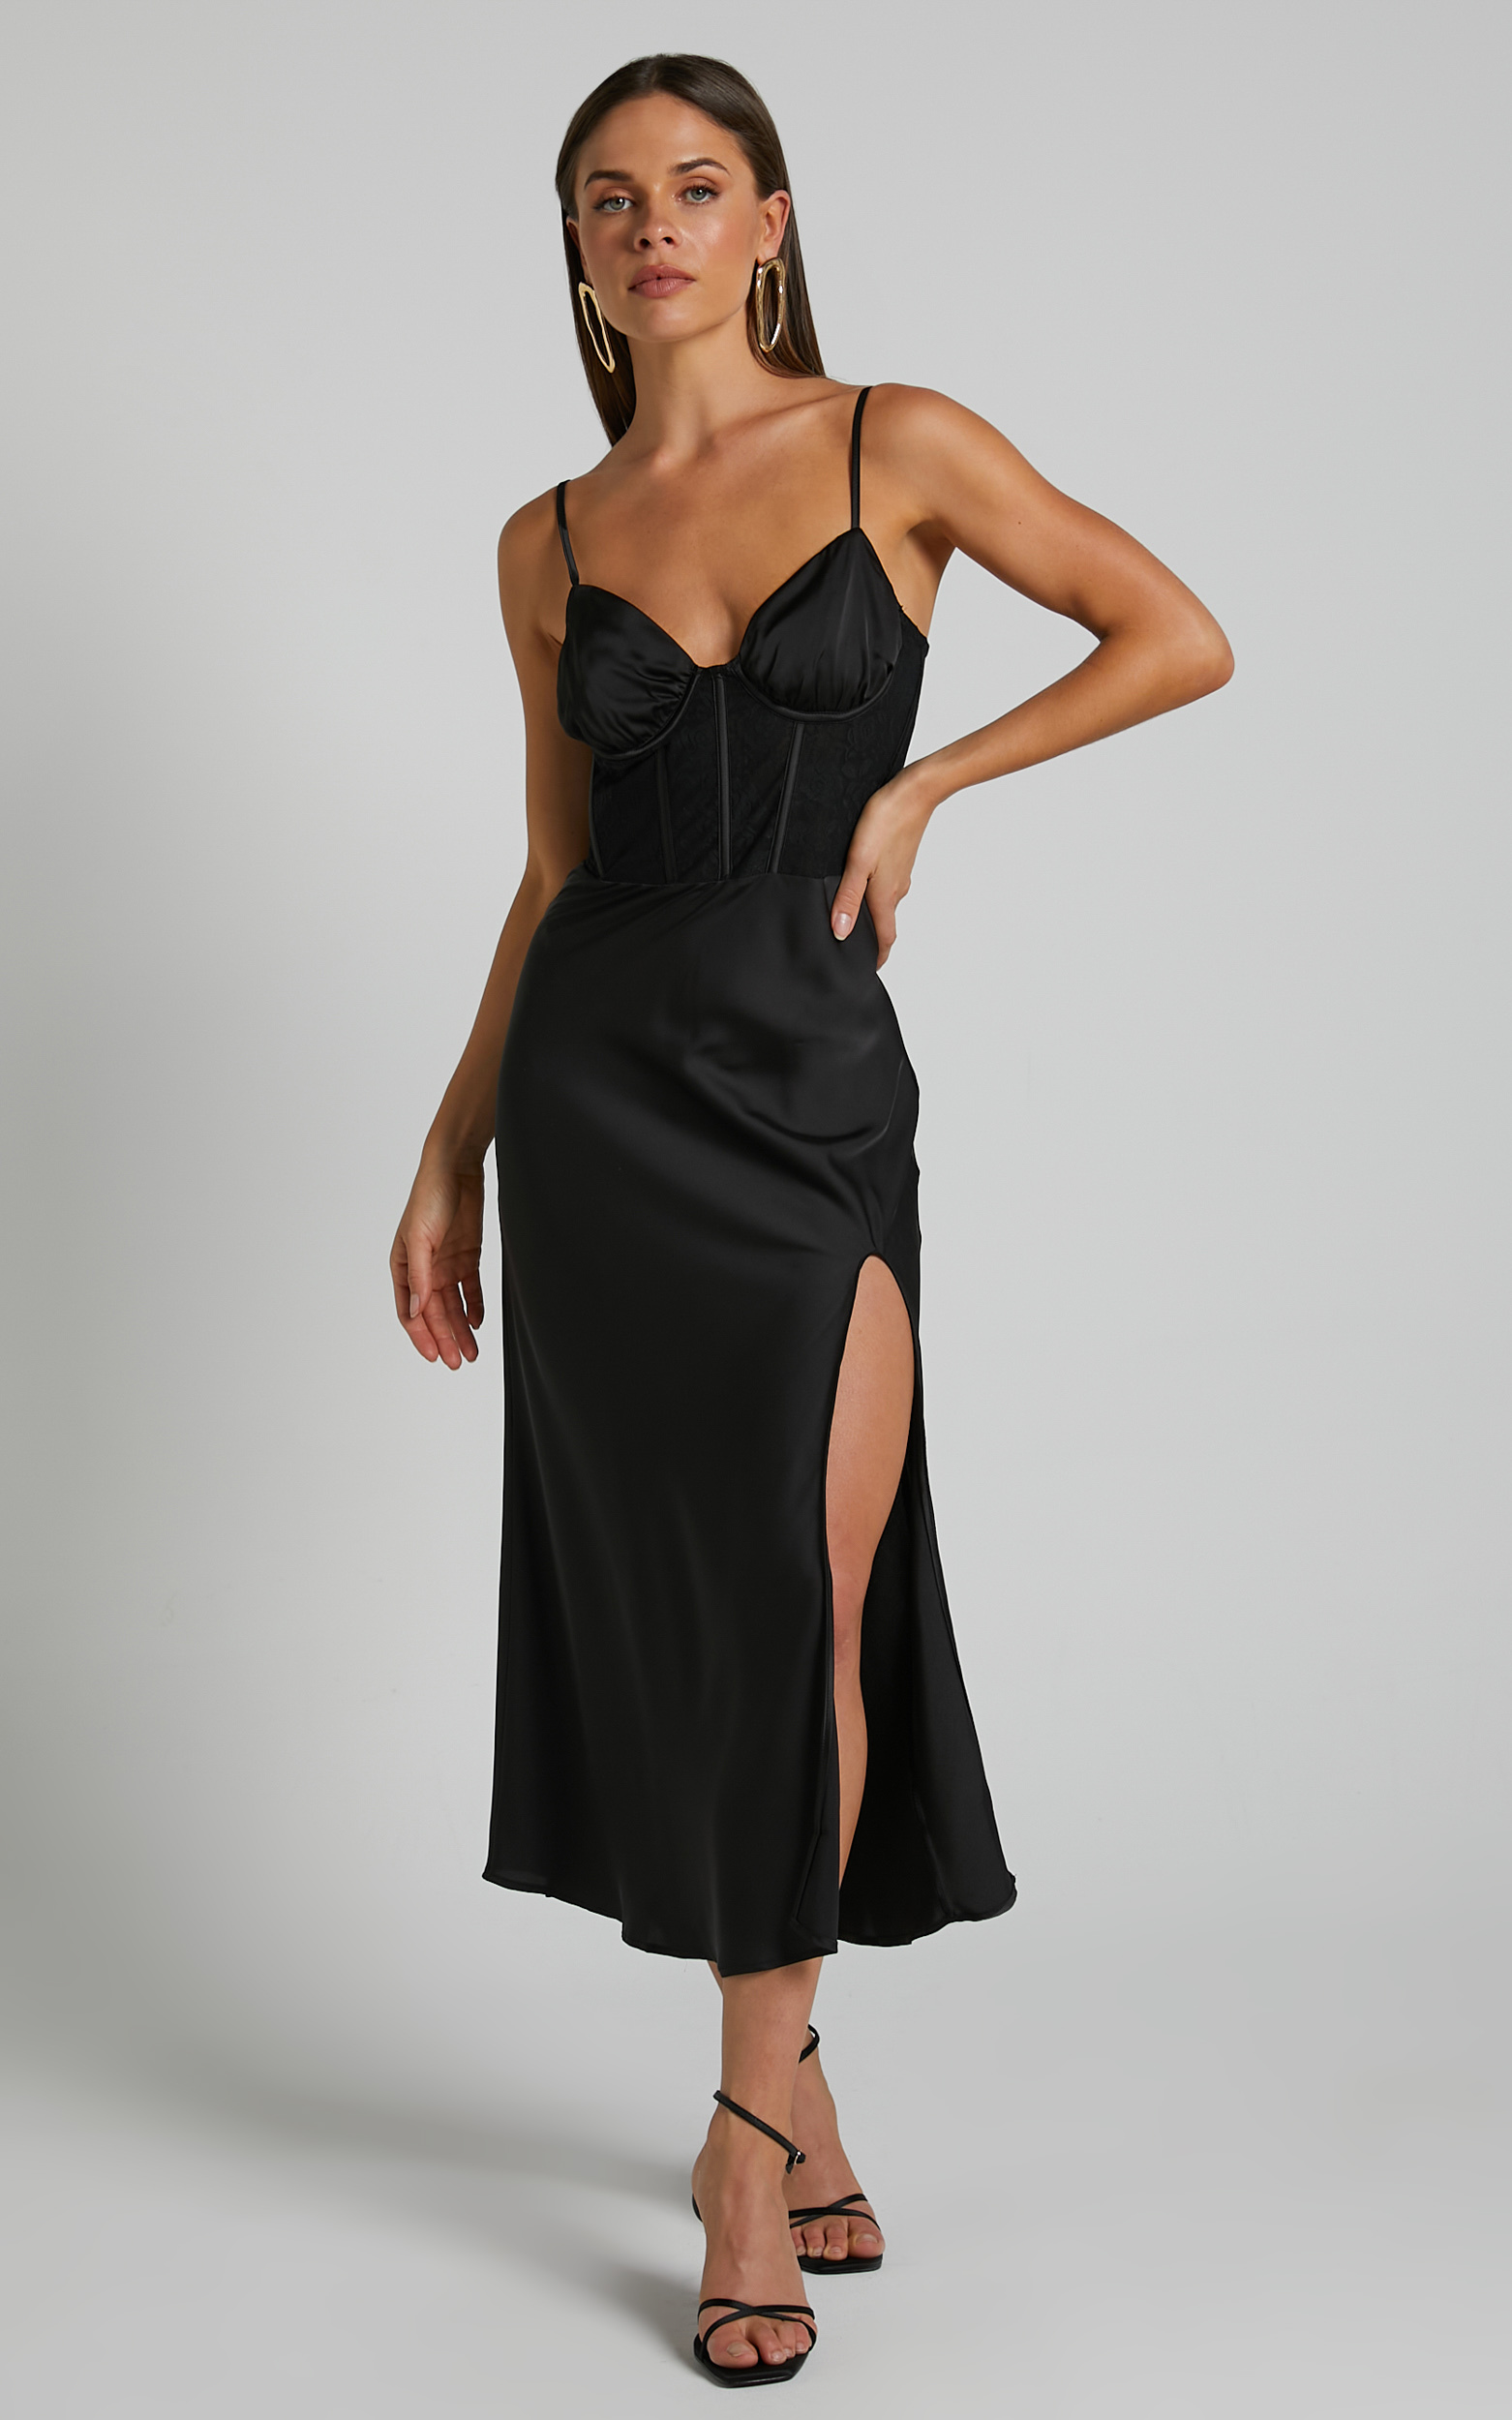 Khallah Lace Bustier Side Split Midi Dress in Black - 06, BLK1, hi-res image number null